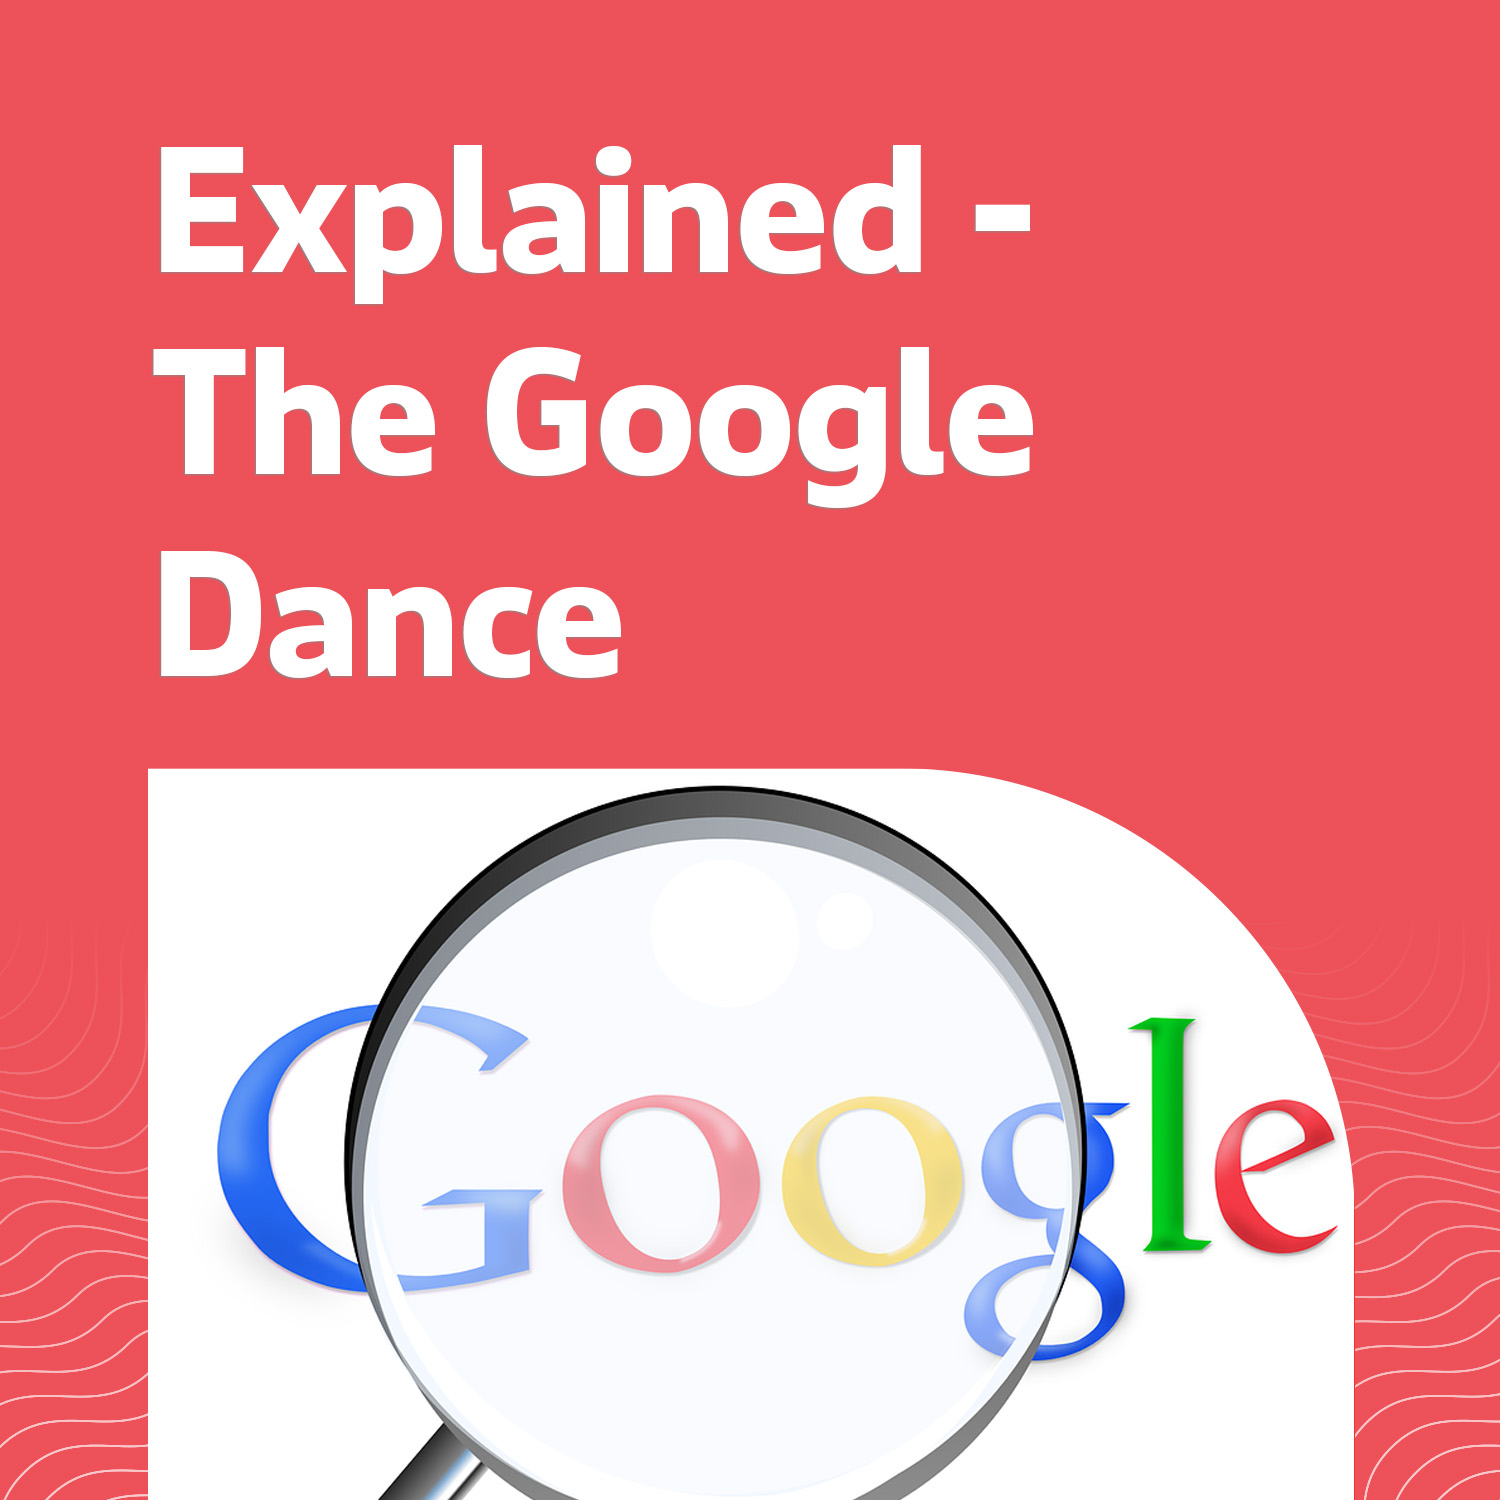 The Google Dance